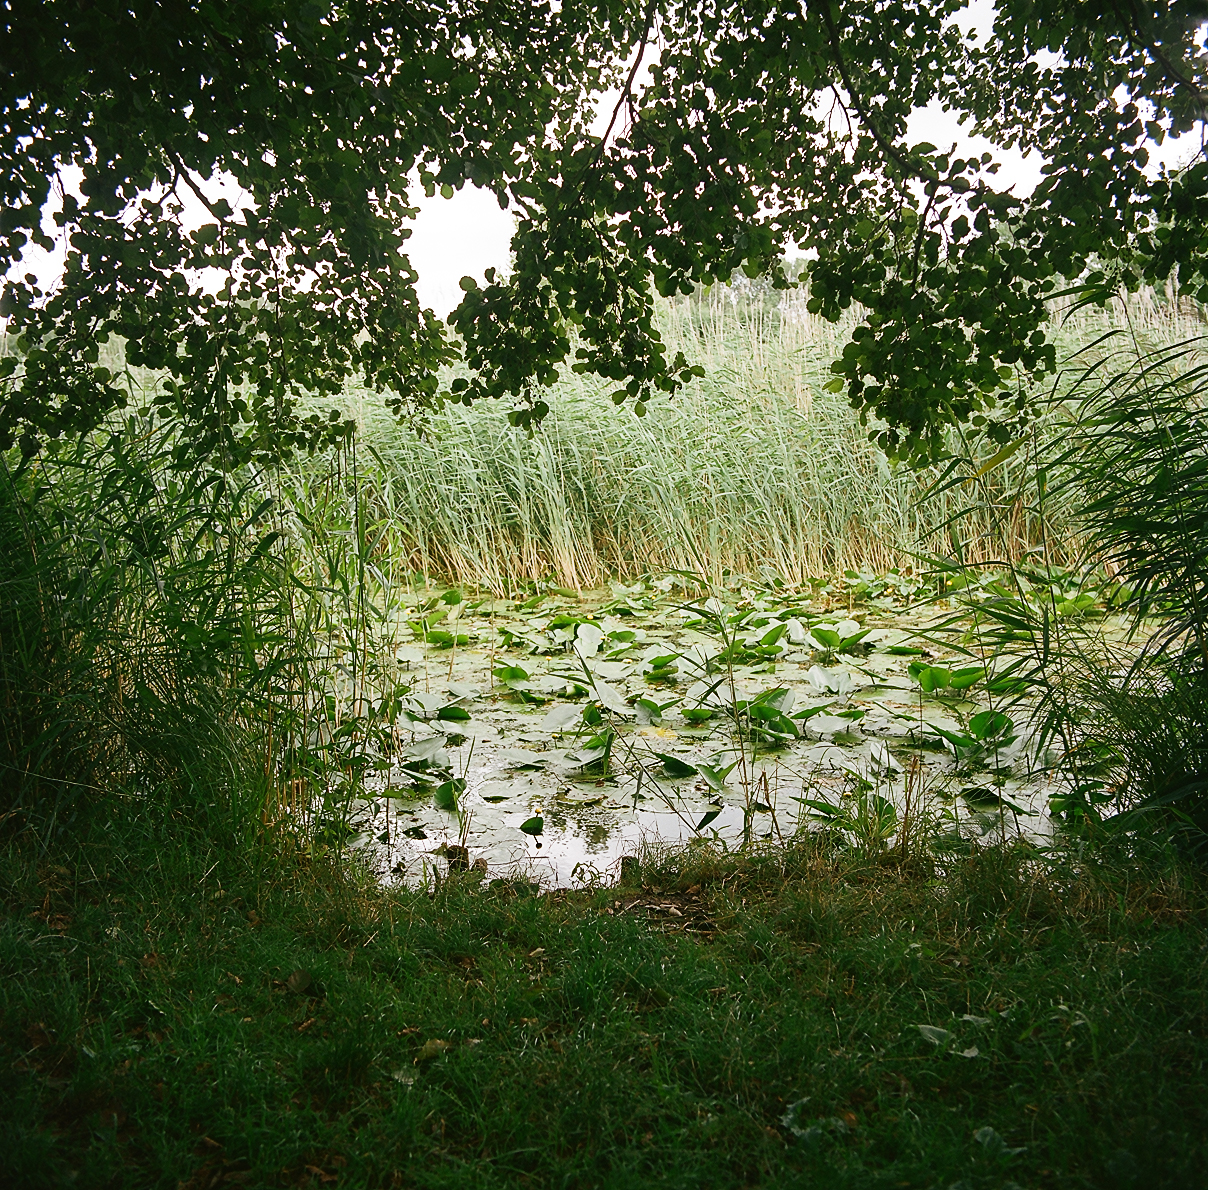 The canals on Kamionkowskie Błonia Elekcyjne, with their lush aquatic and swamp greenery, require seasonal gardening.